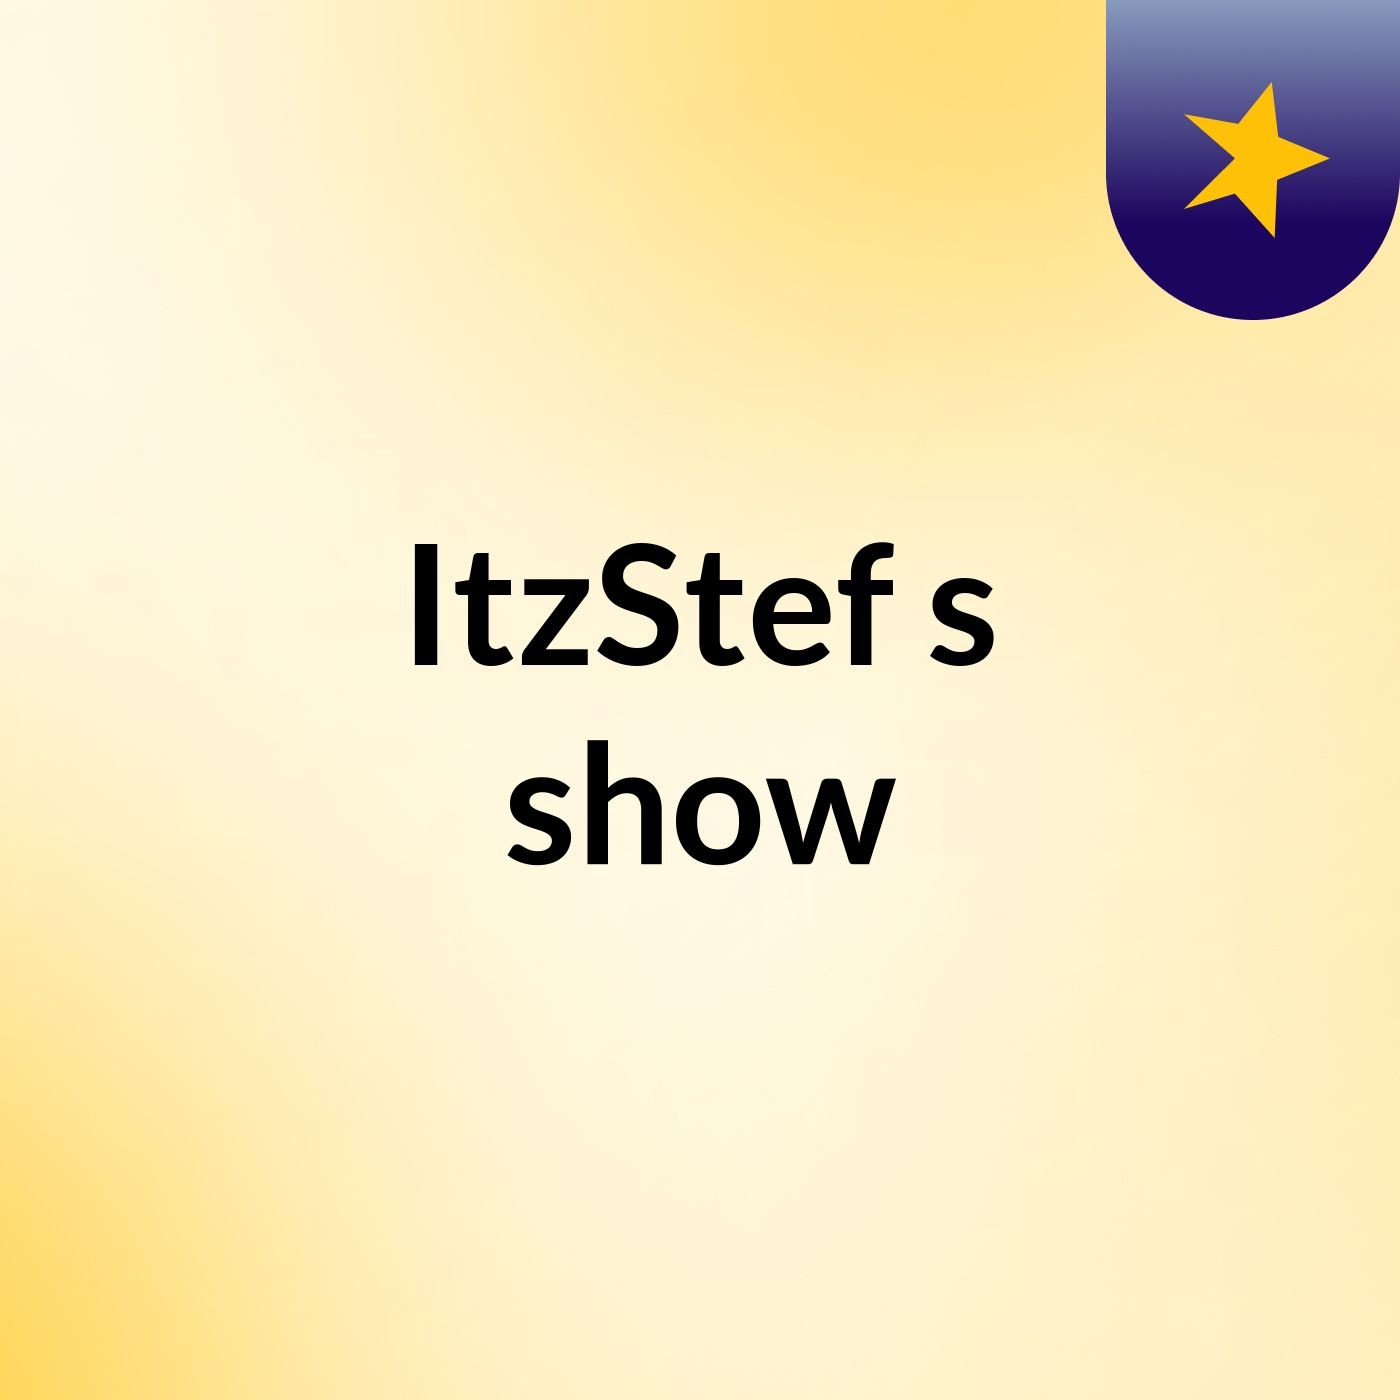 ItzStef's show